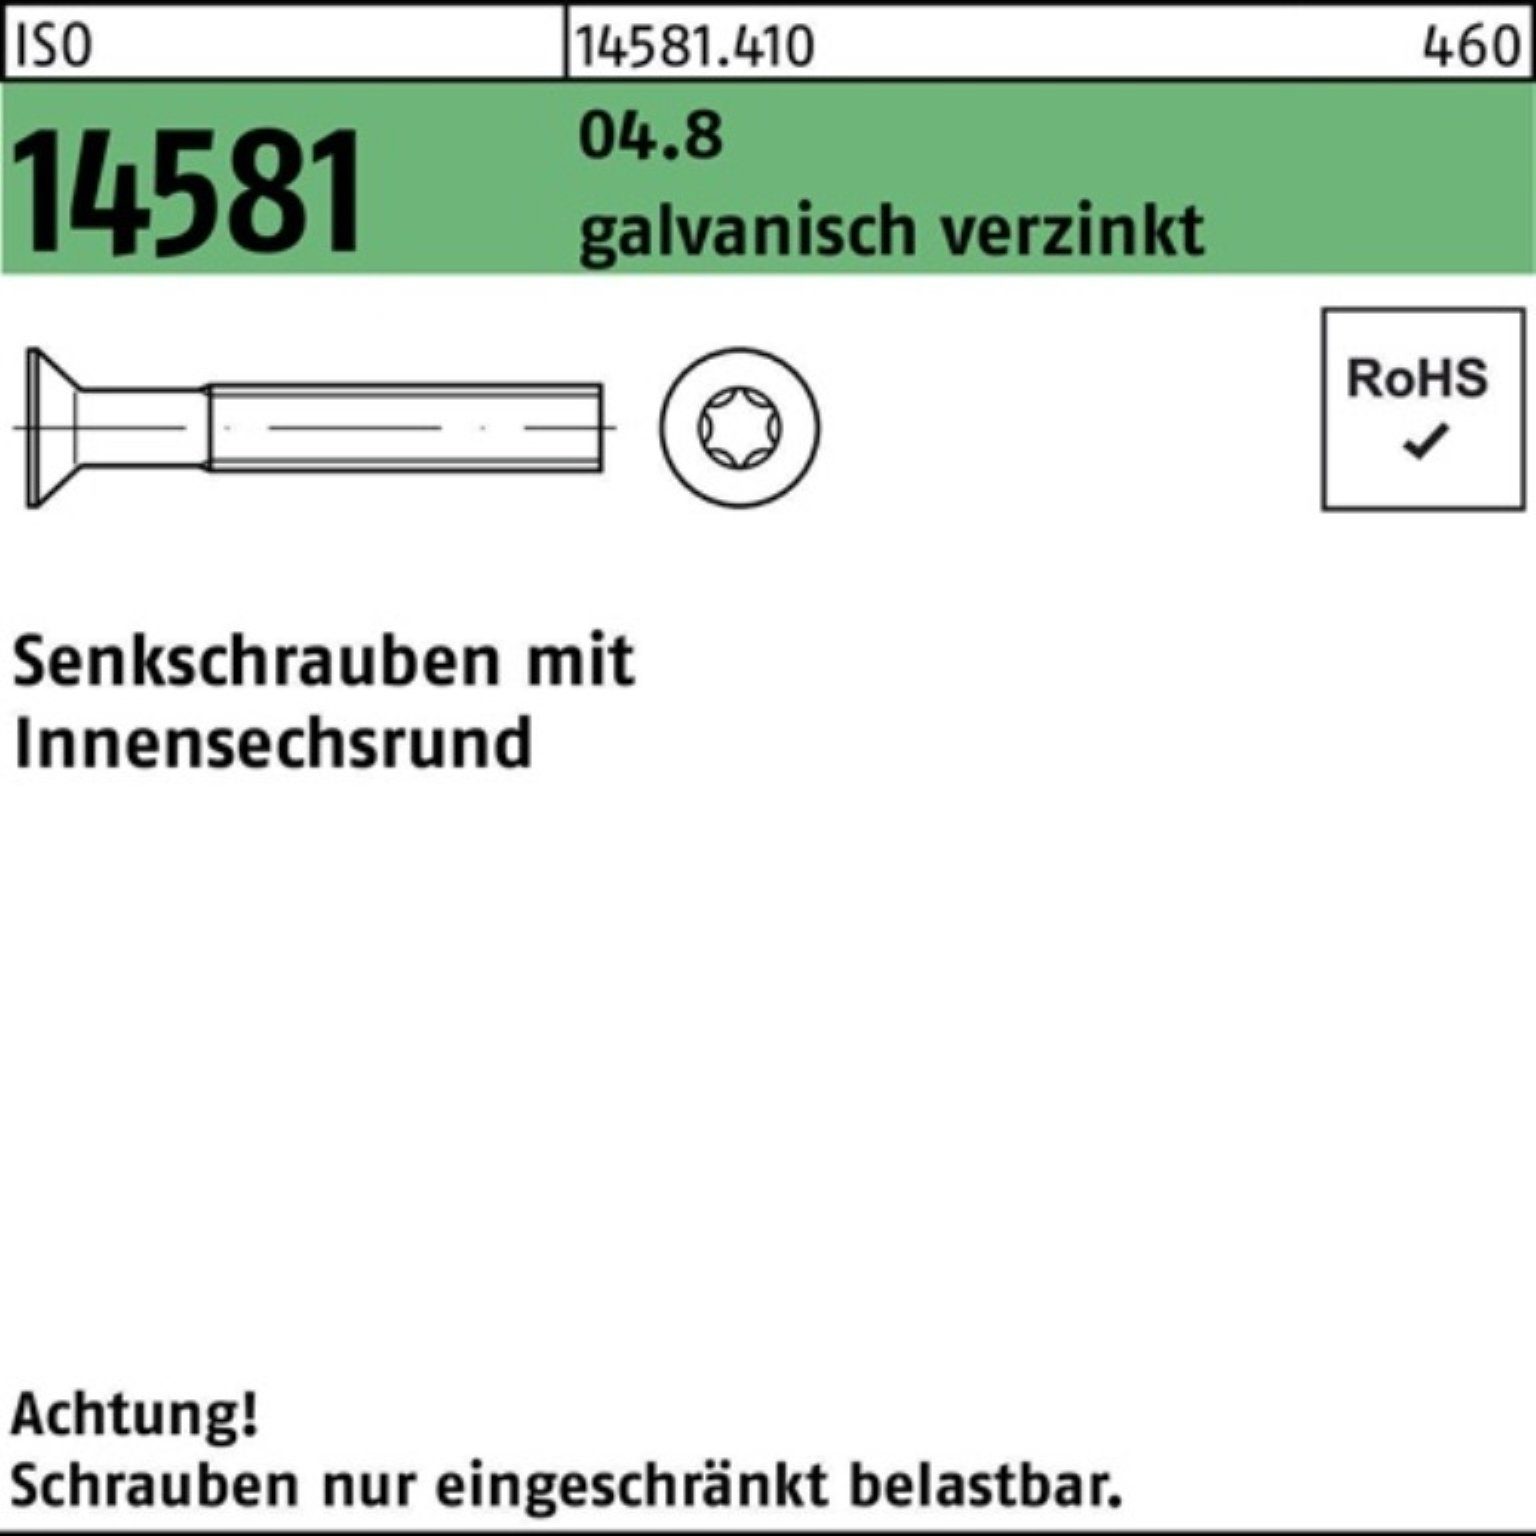 Reyher Senkschraube 500er Pack T25 ISR ISO 14581 500St. galv.verz. Senkschraube 04.8 M5x45